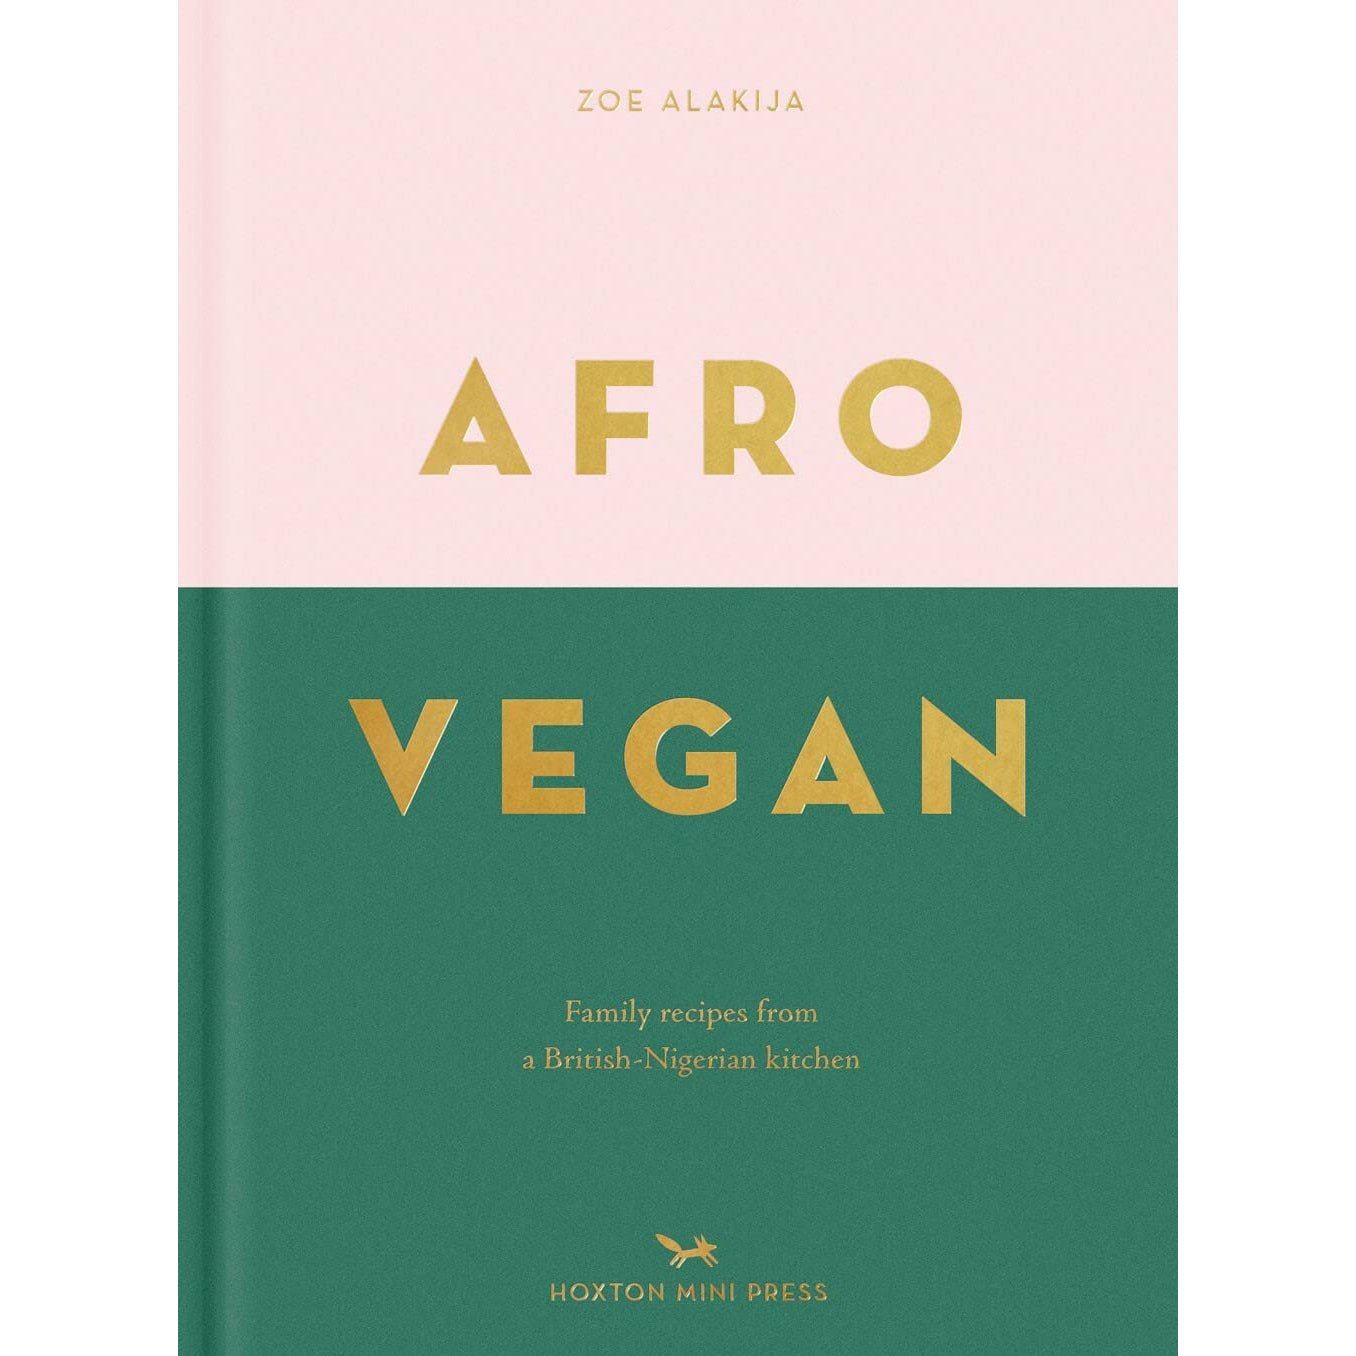 Afro Vegan: Family recipes from a British-Nigerian kitchen by Zoe Alakija